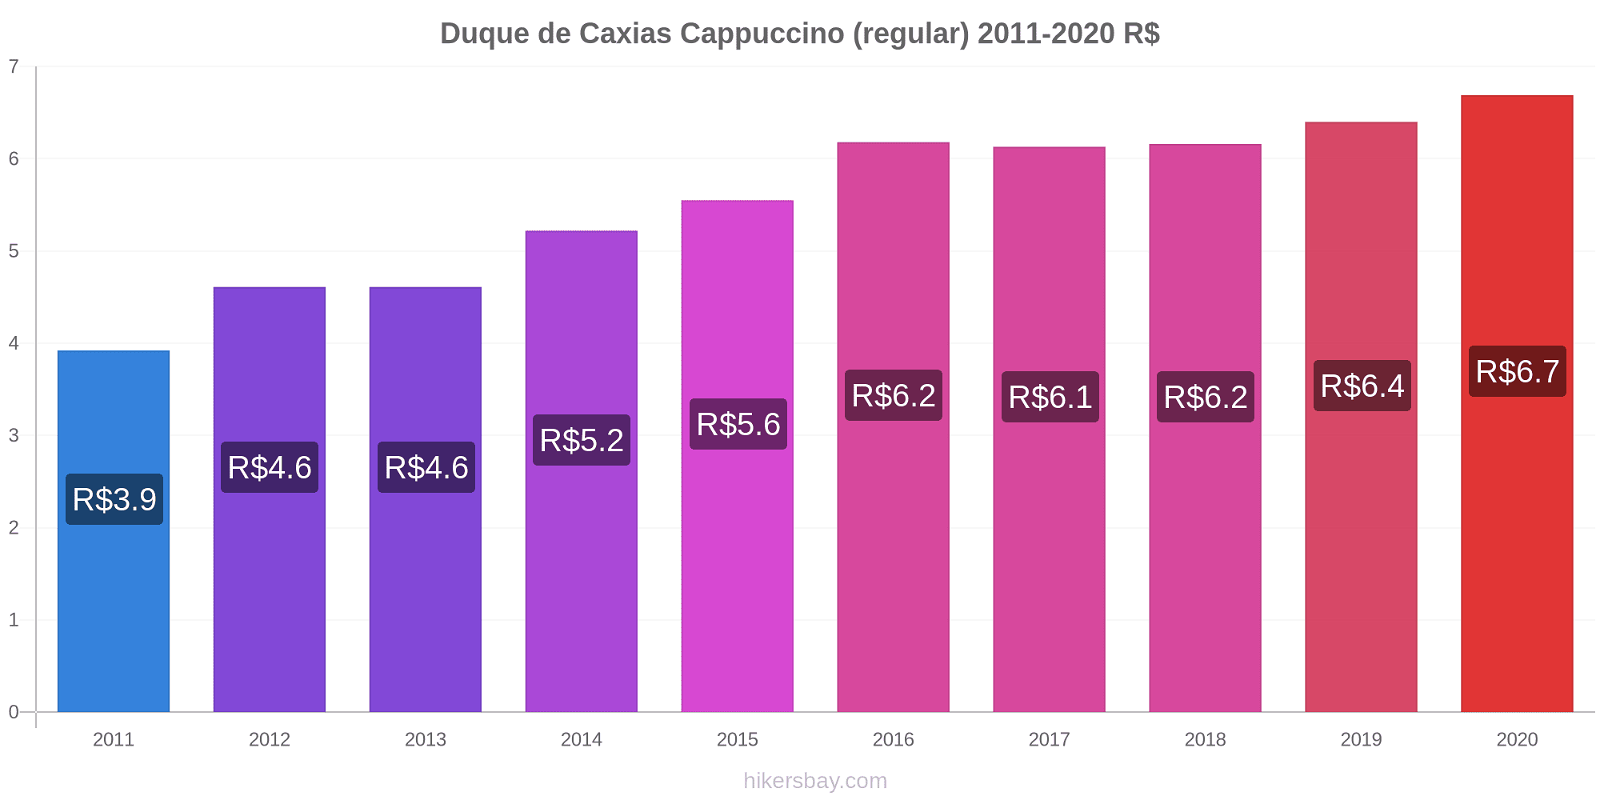 Duque de Caxias price changes Cappuccino (regular) hikersbay.com